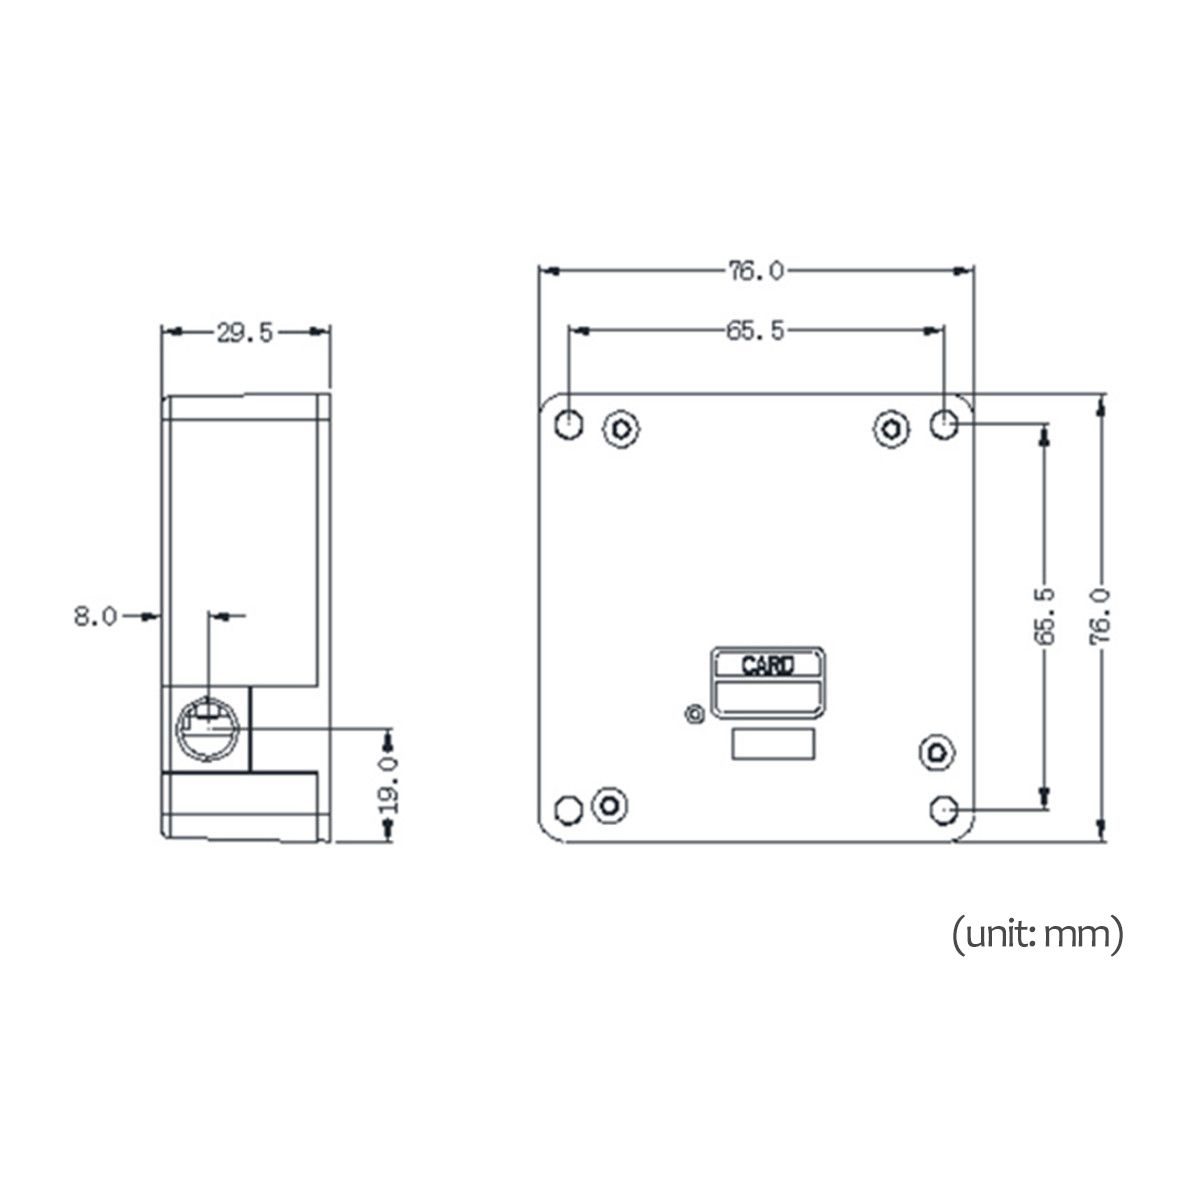 No-hole-Sensor-Cabinet-Lock-Electronic-Hidden-Home-Furniture-Door-Drawers-Lock-1688079